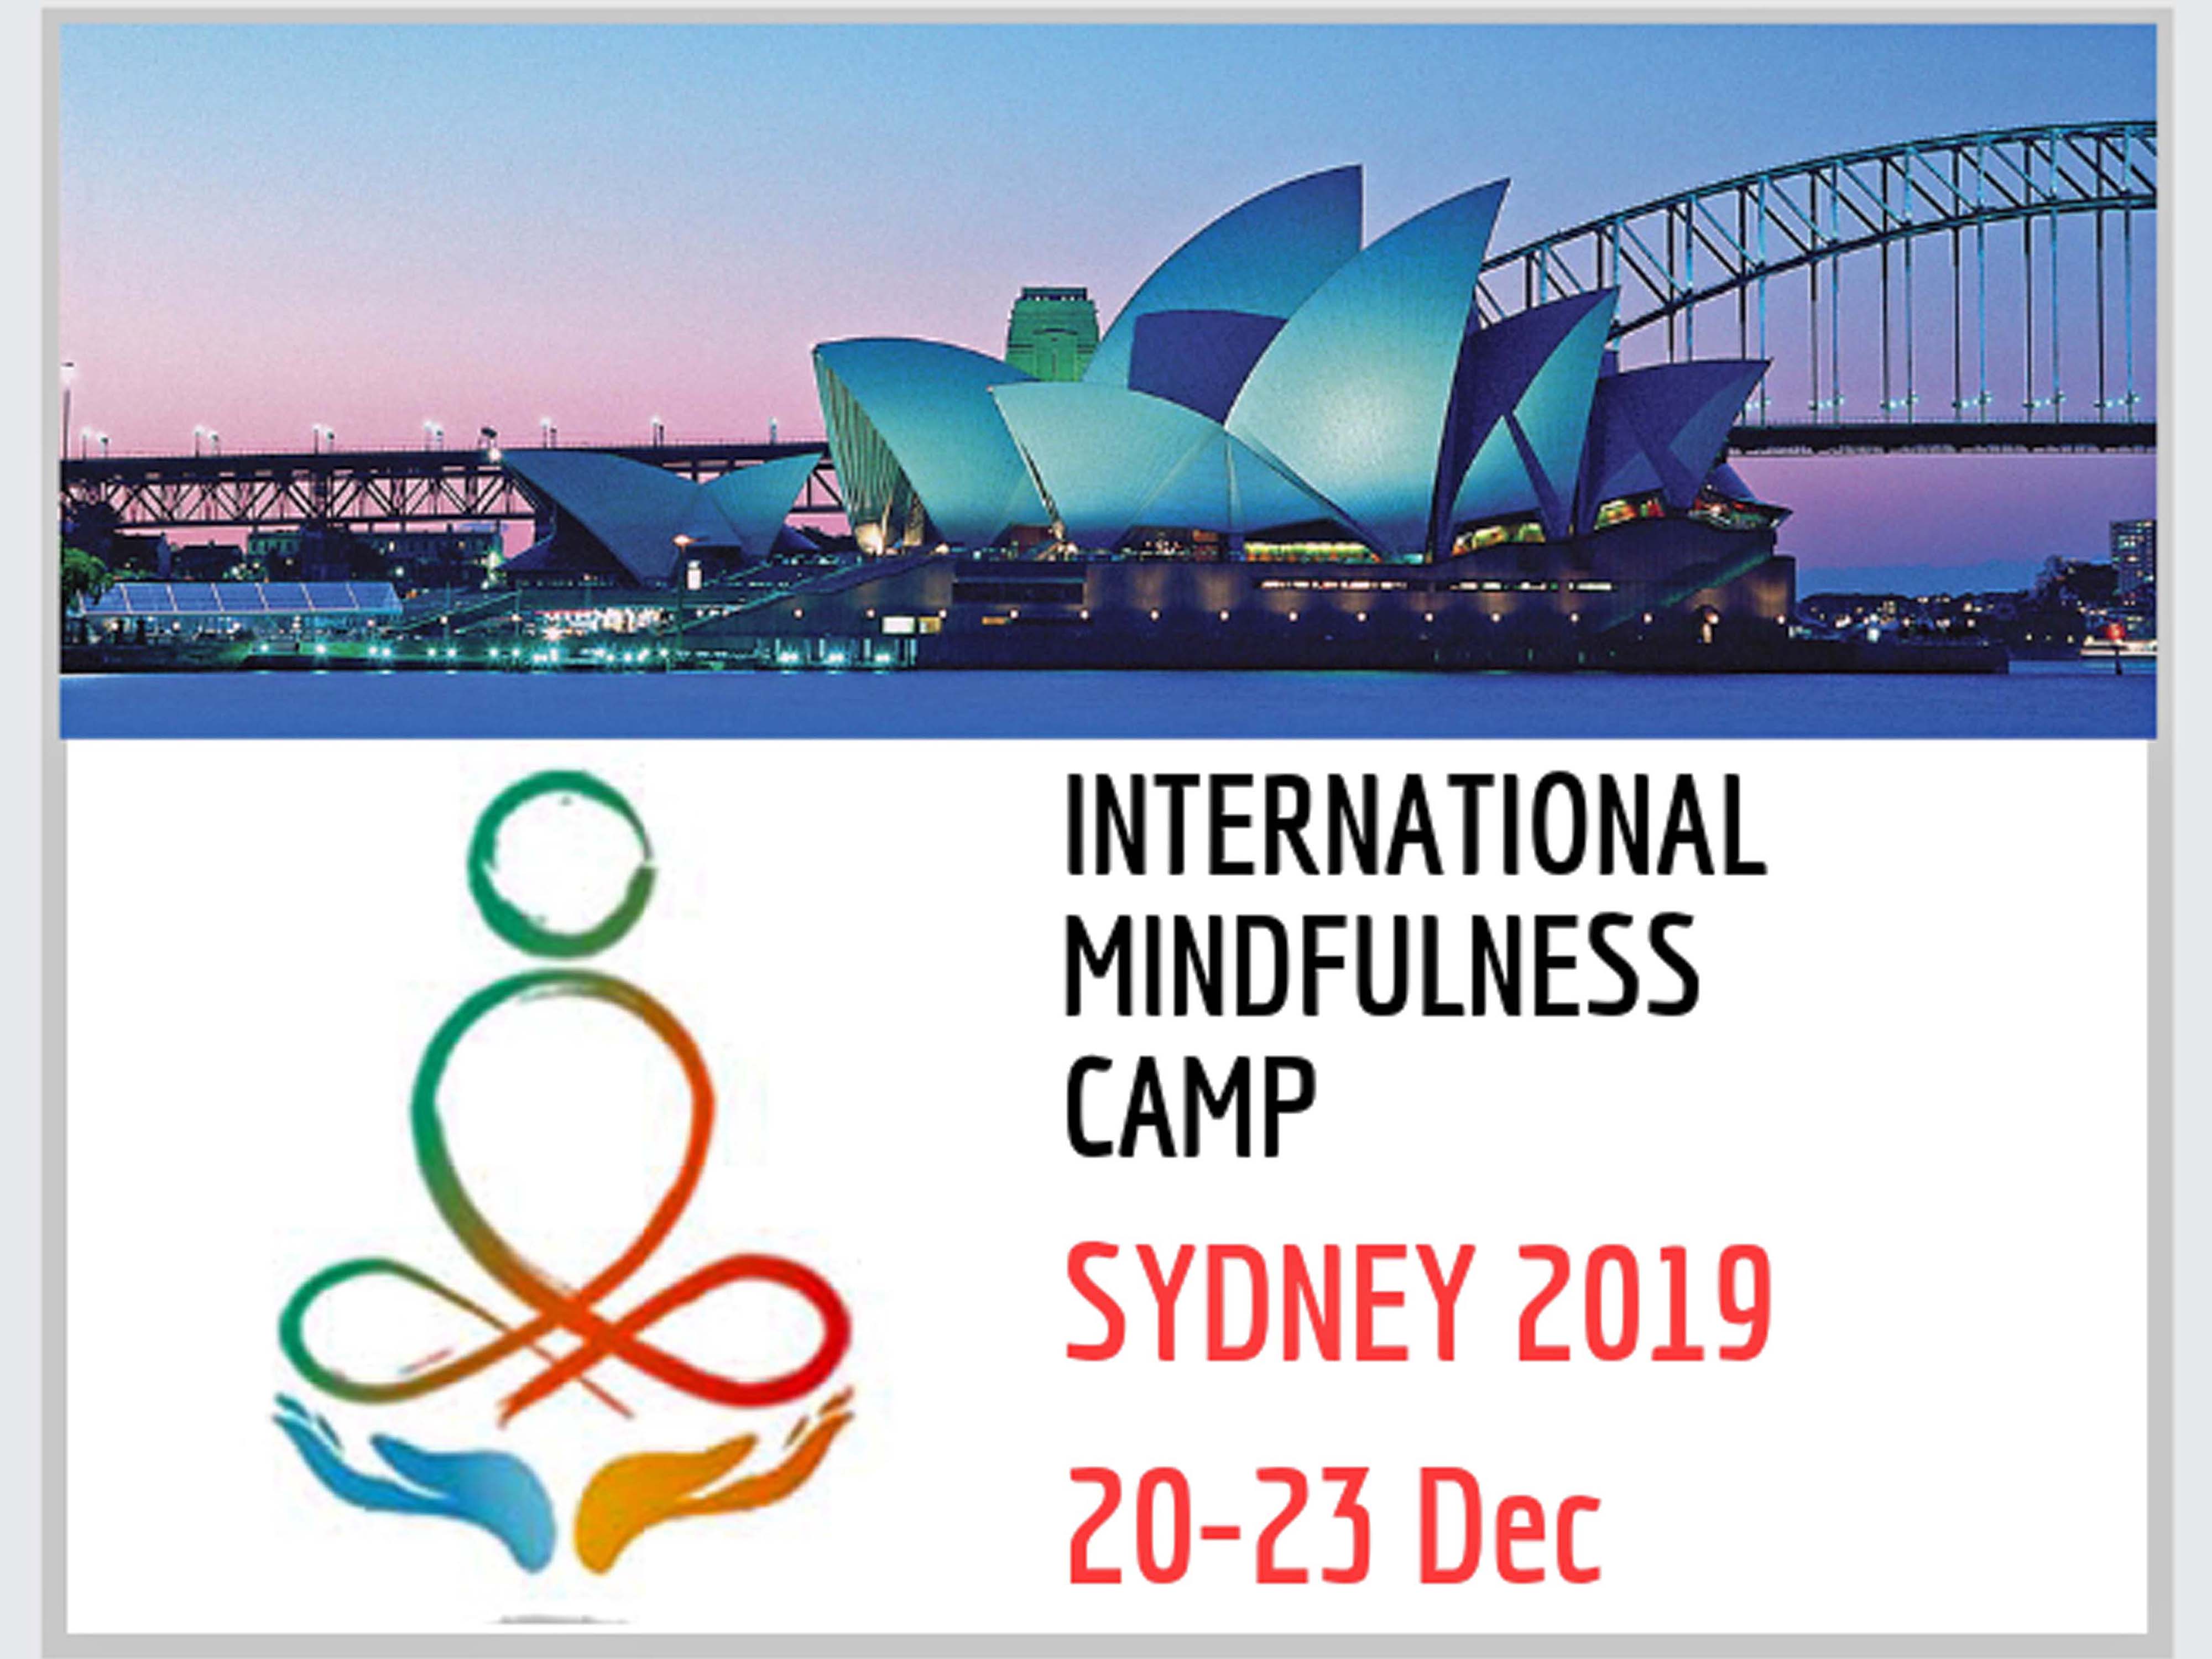 International Mindfulness Camp Sydney 2019